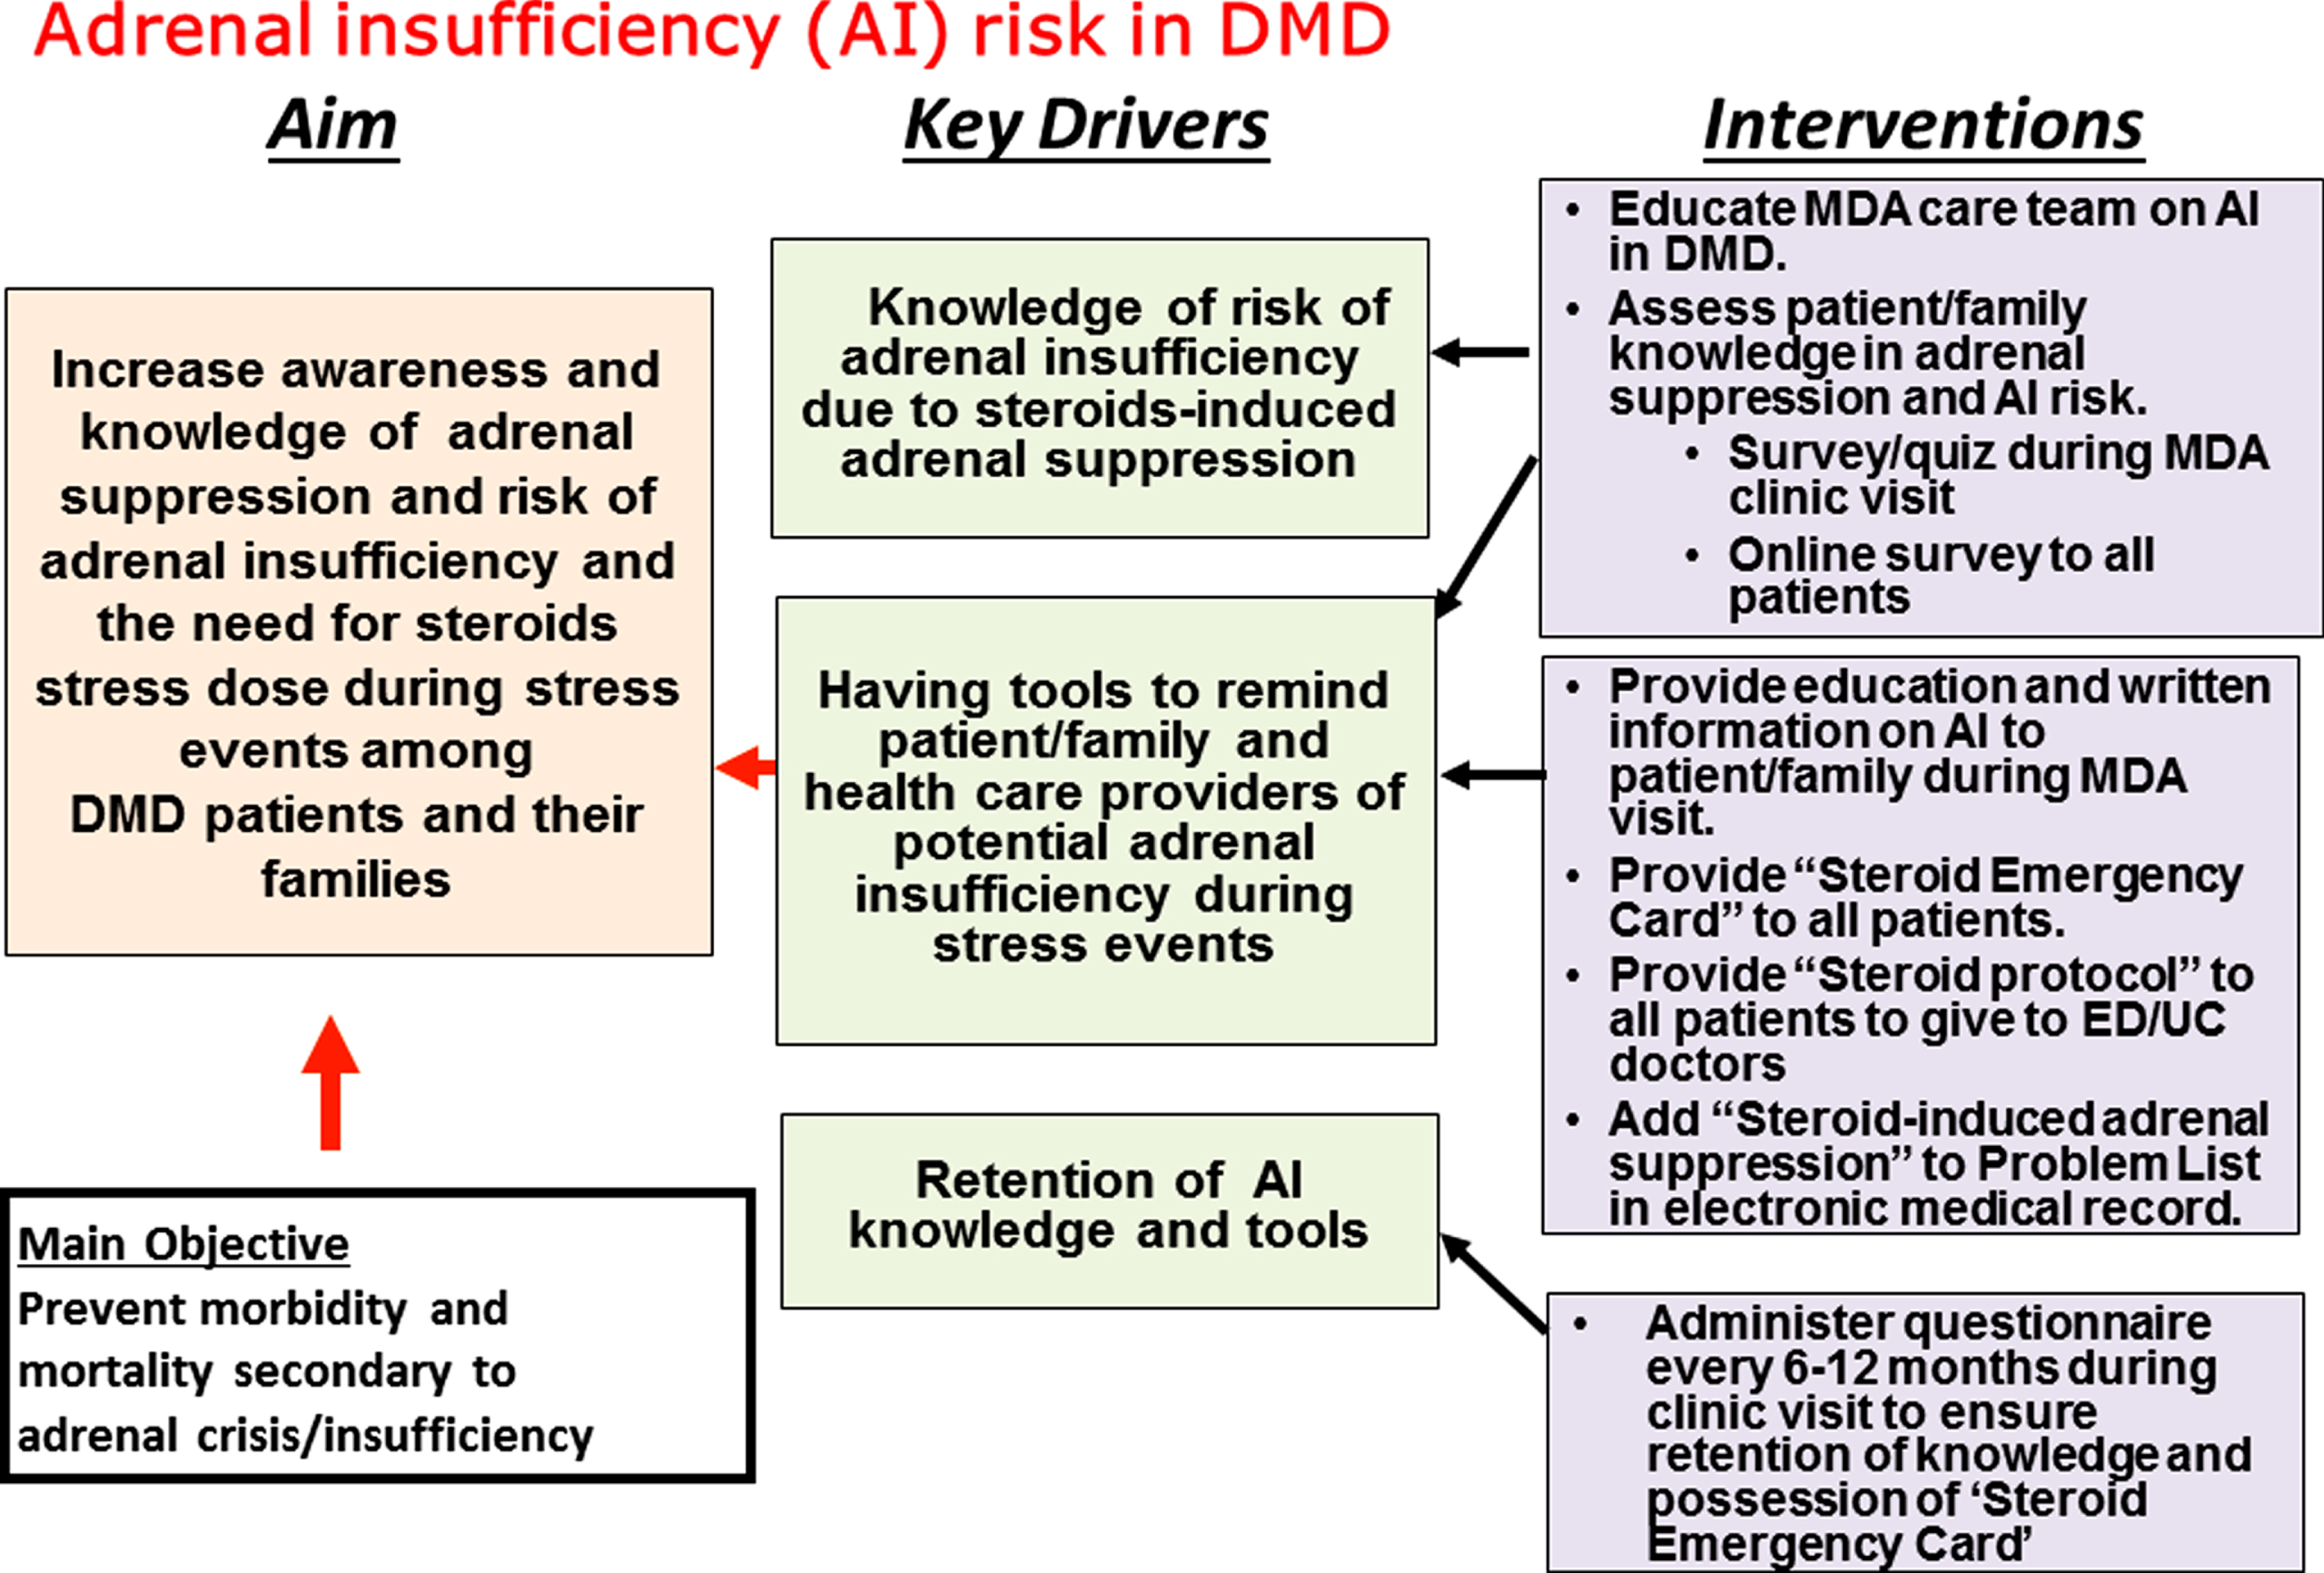 adrenal insufficiency awareness